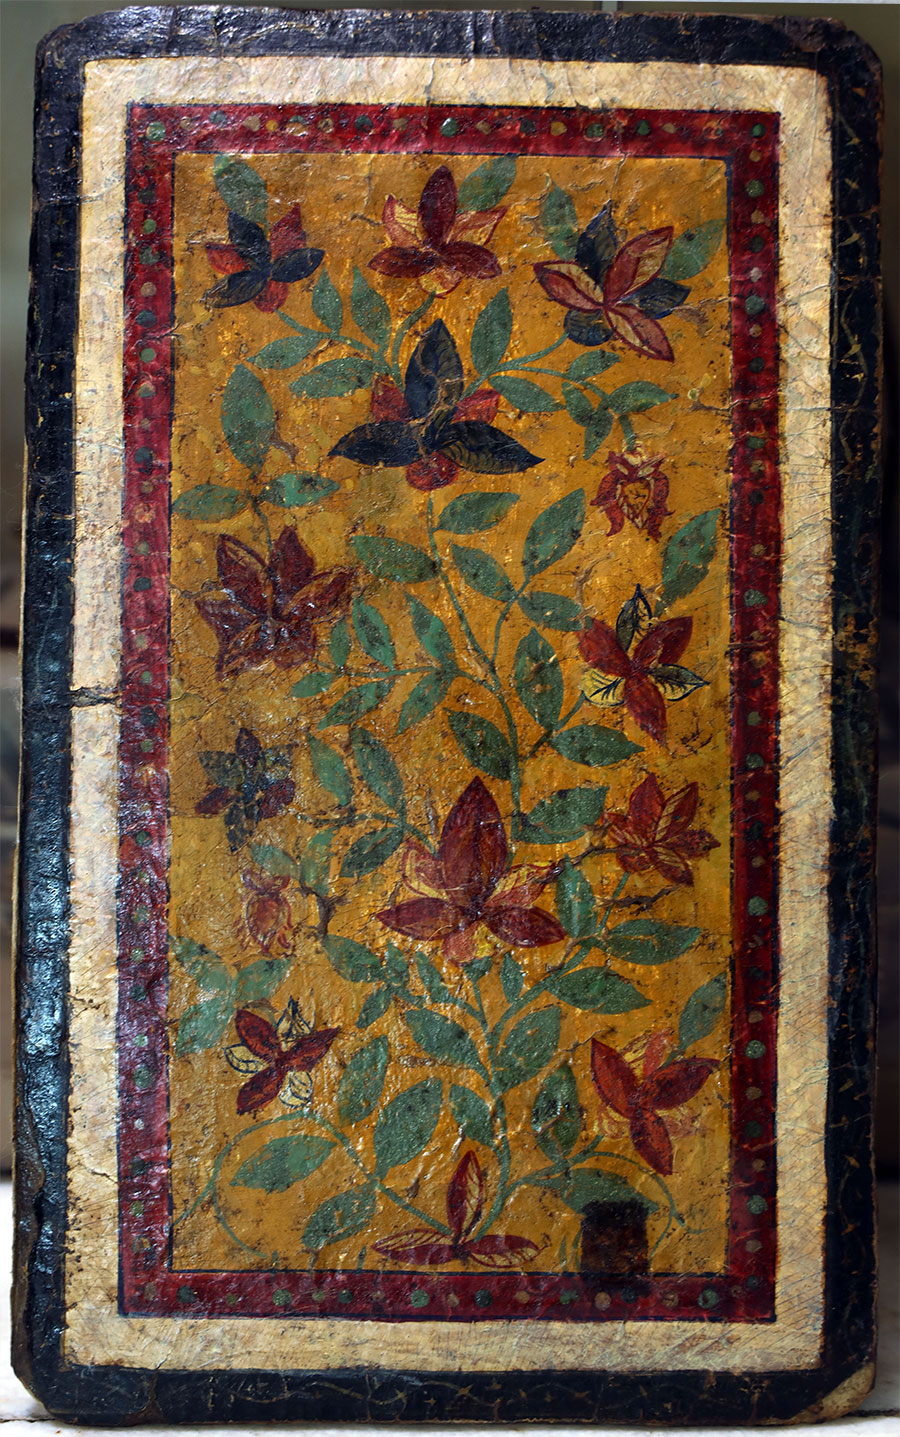 Mitra Etezadi: Old Quran cover after restoration